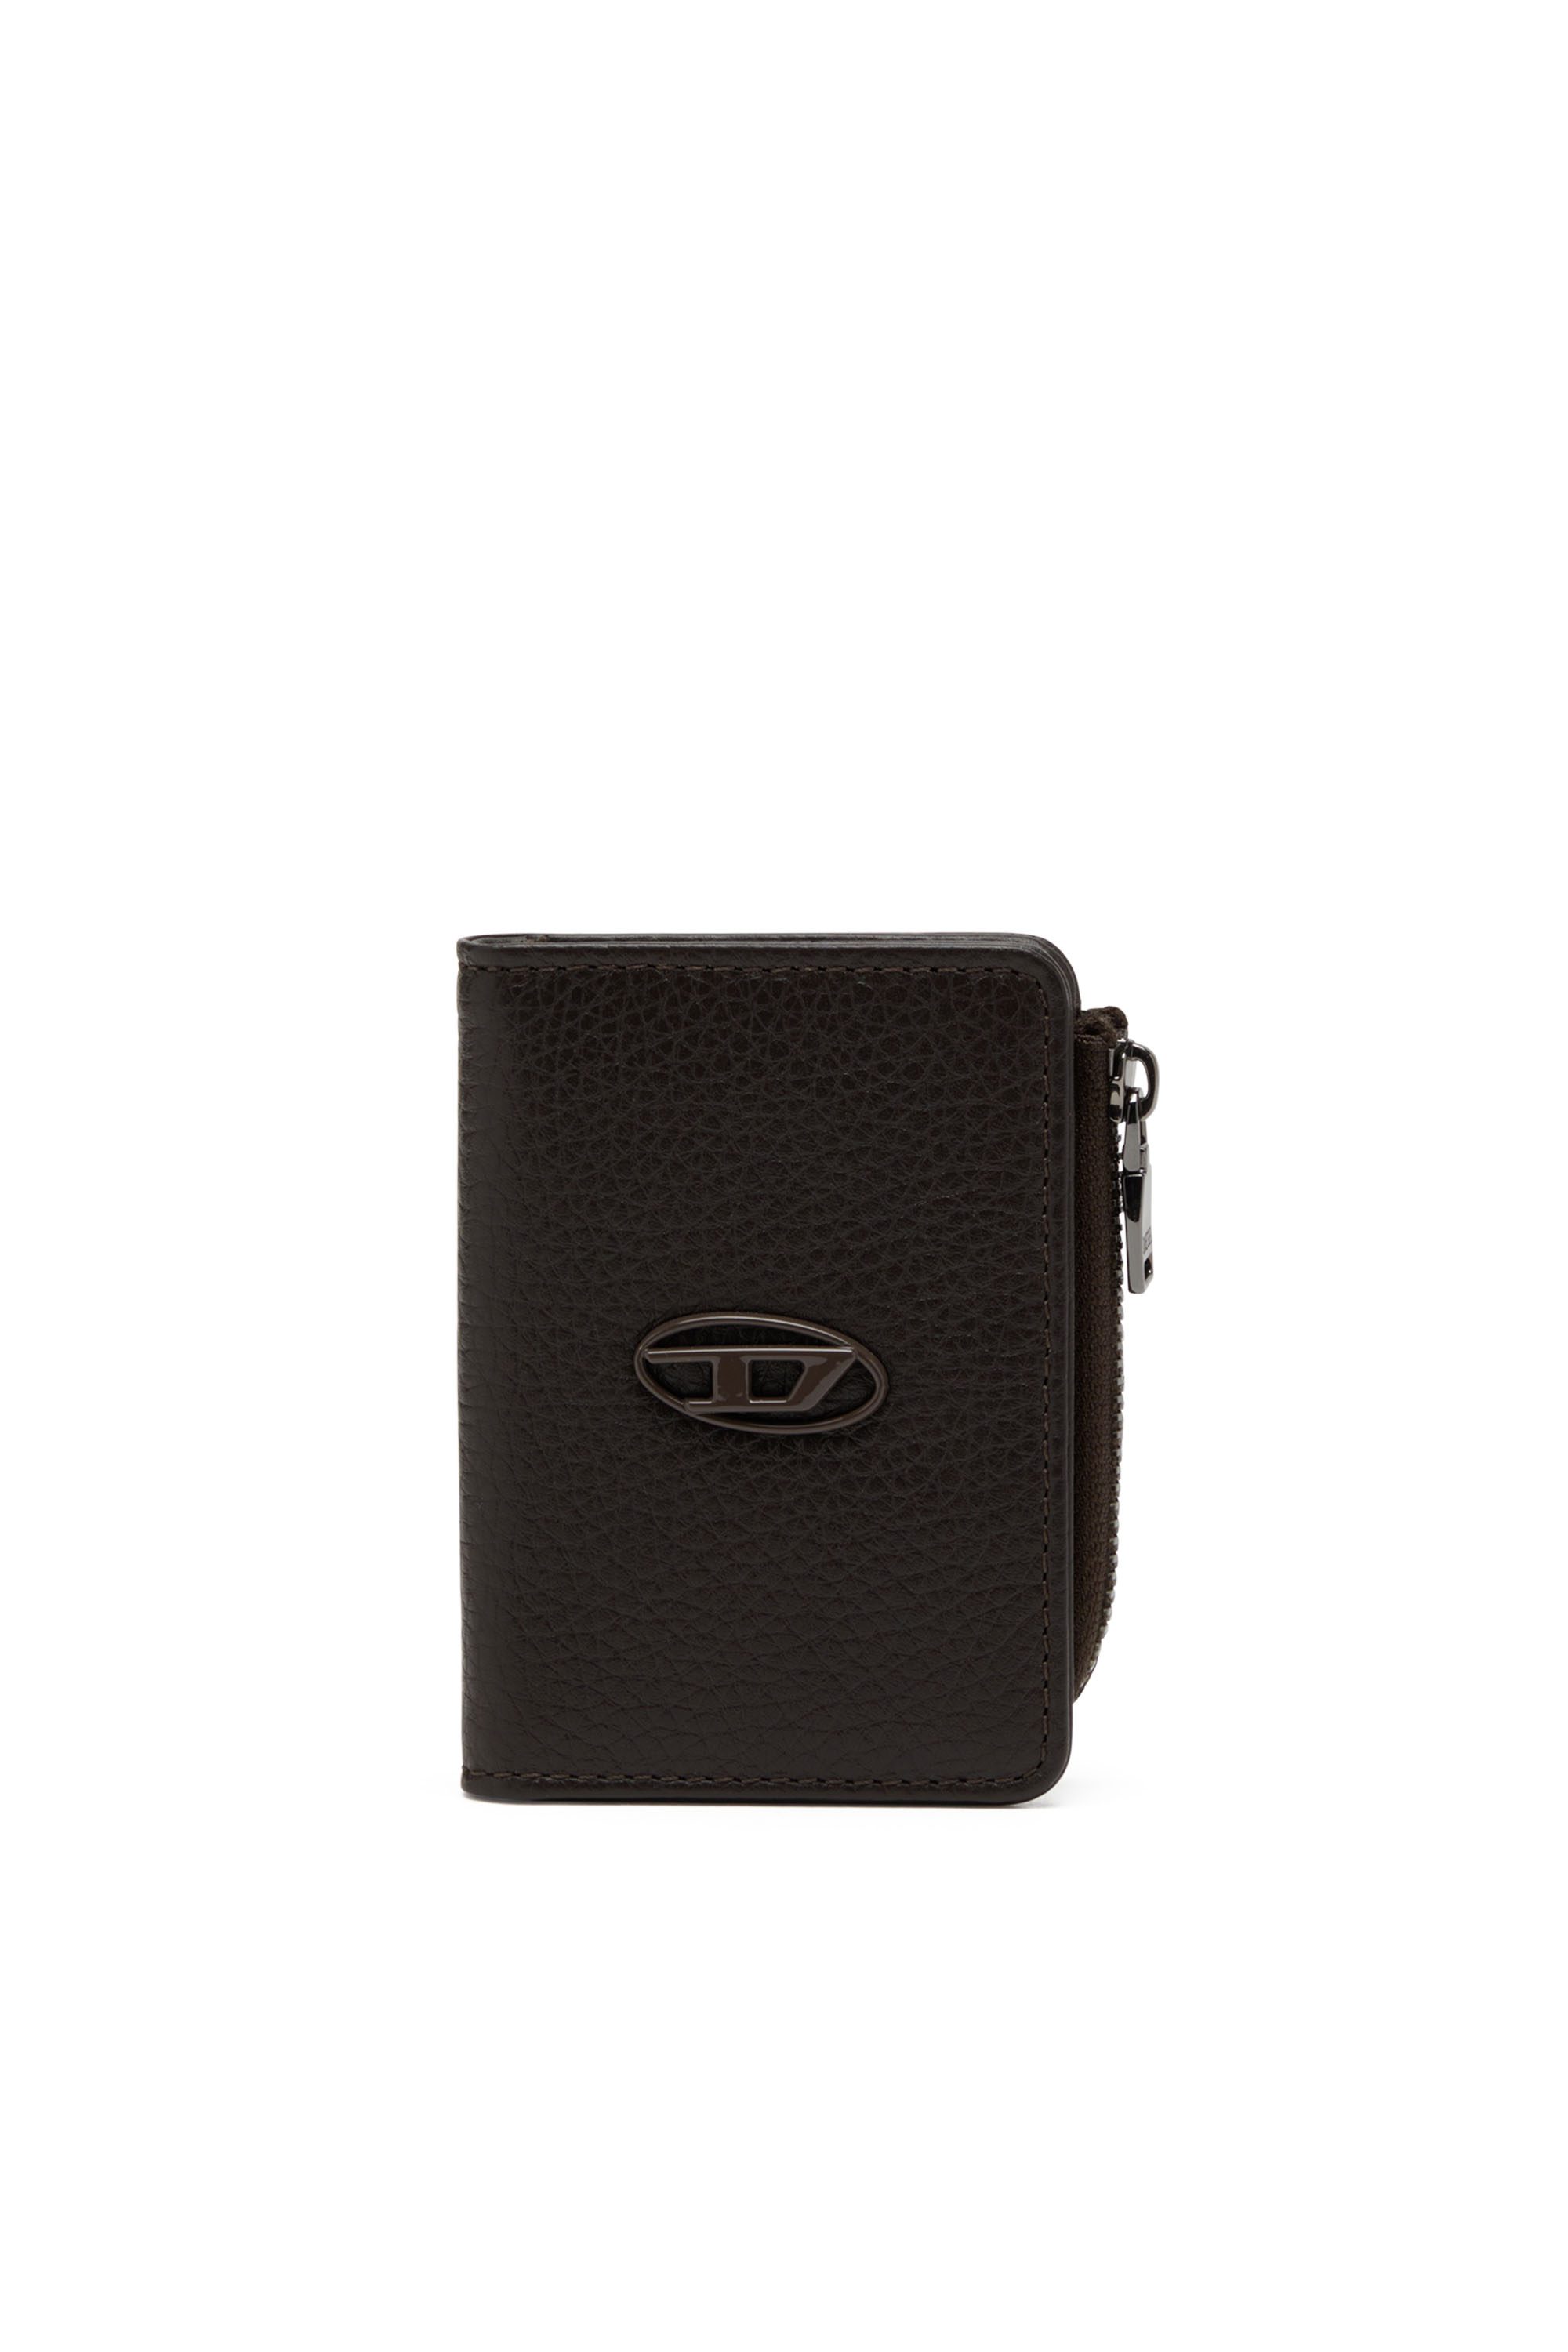 Diesel - HISSU EVO CARD HOLDER L, Male Leather card holder in ブラウン - Image 1